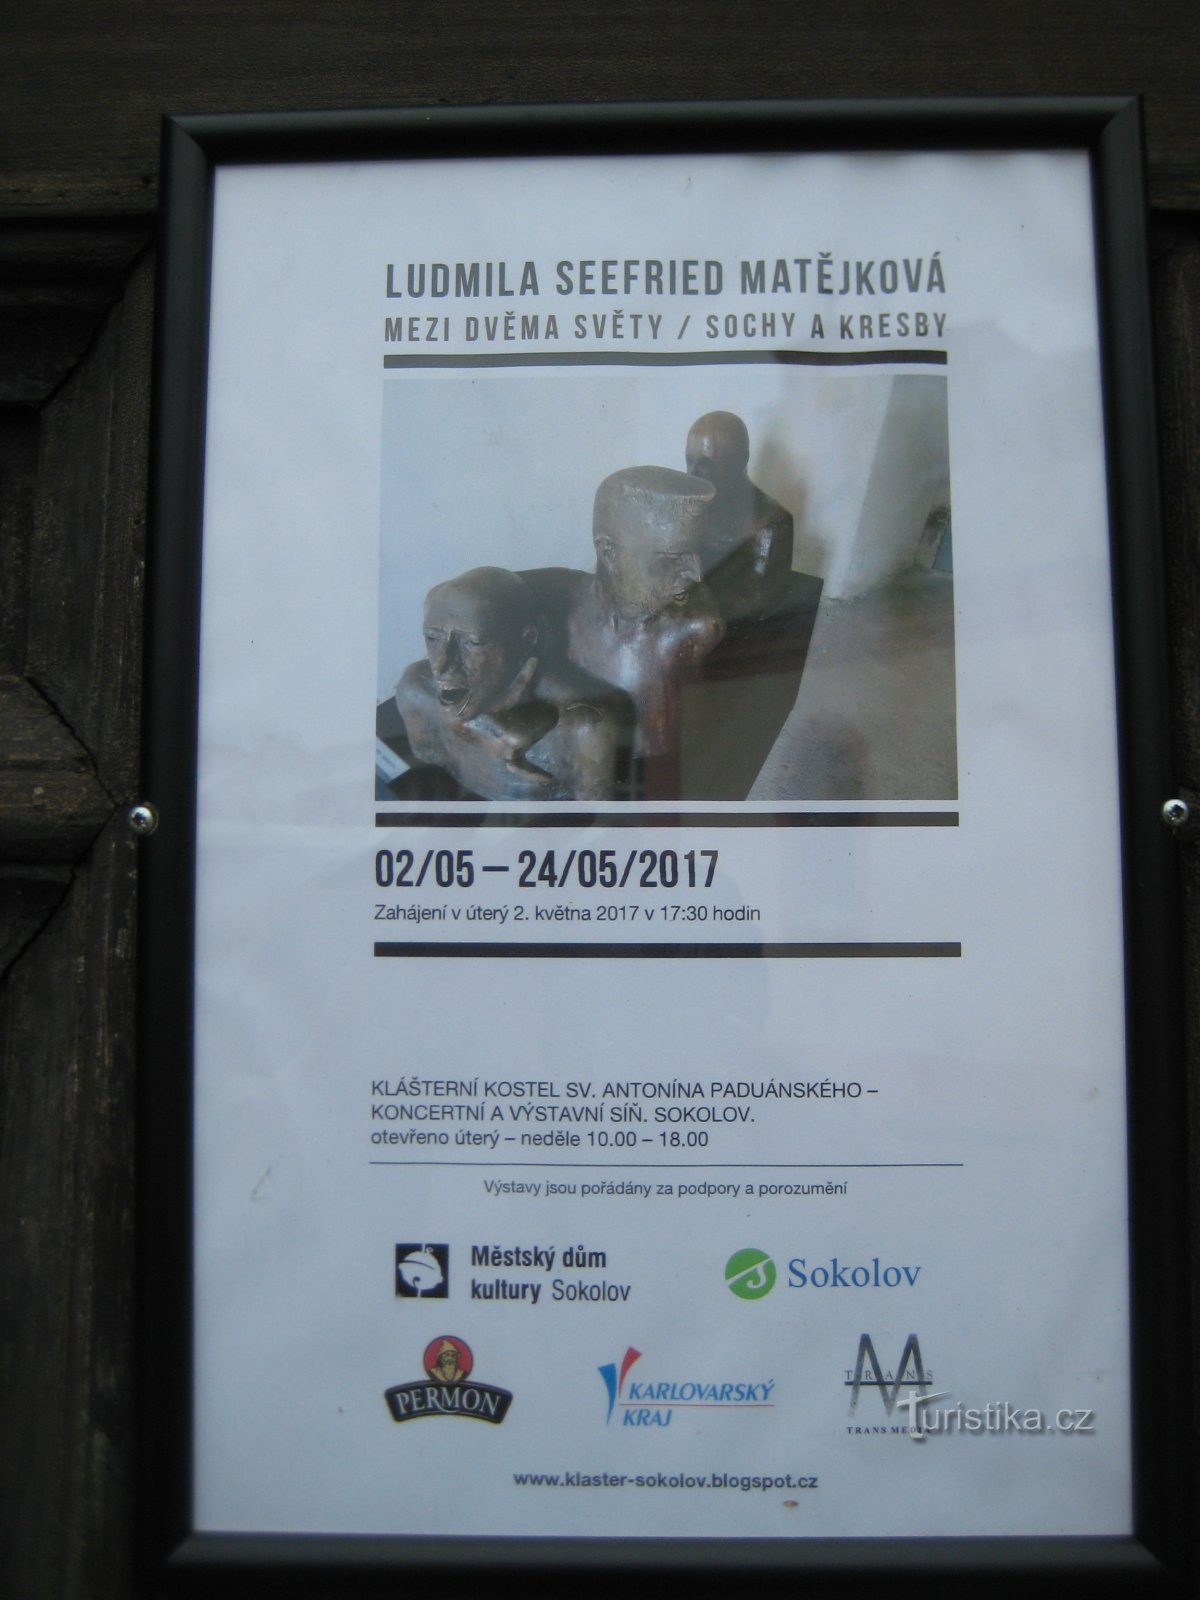 Exposição Entre dois mundos - Ludmila Seefried Matějková - Sokolov